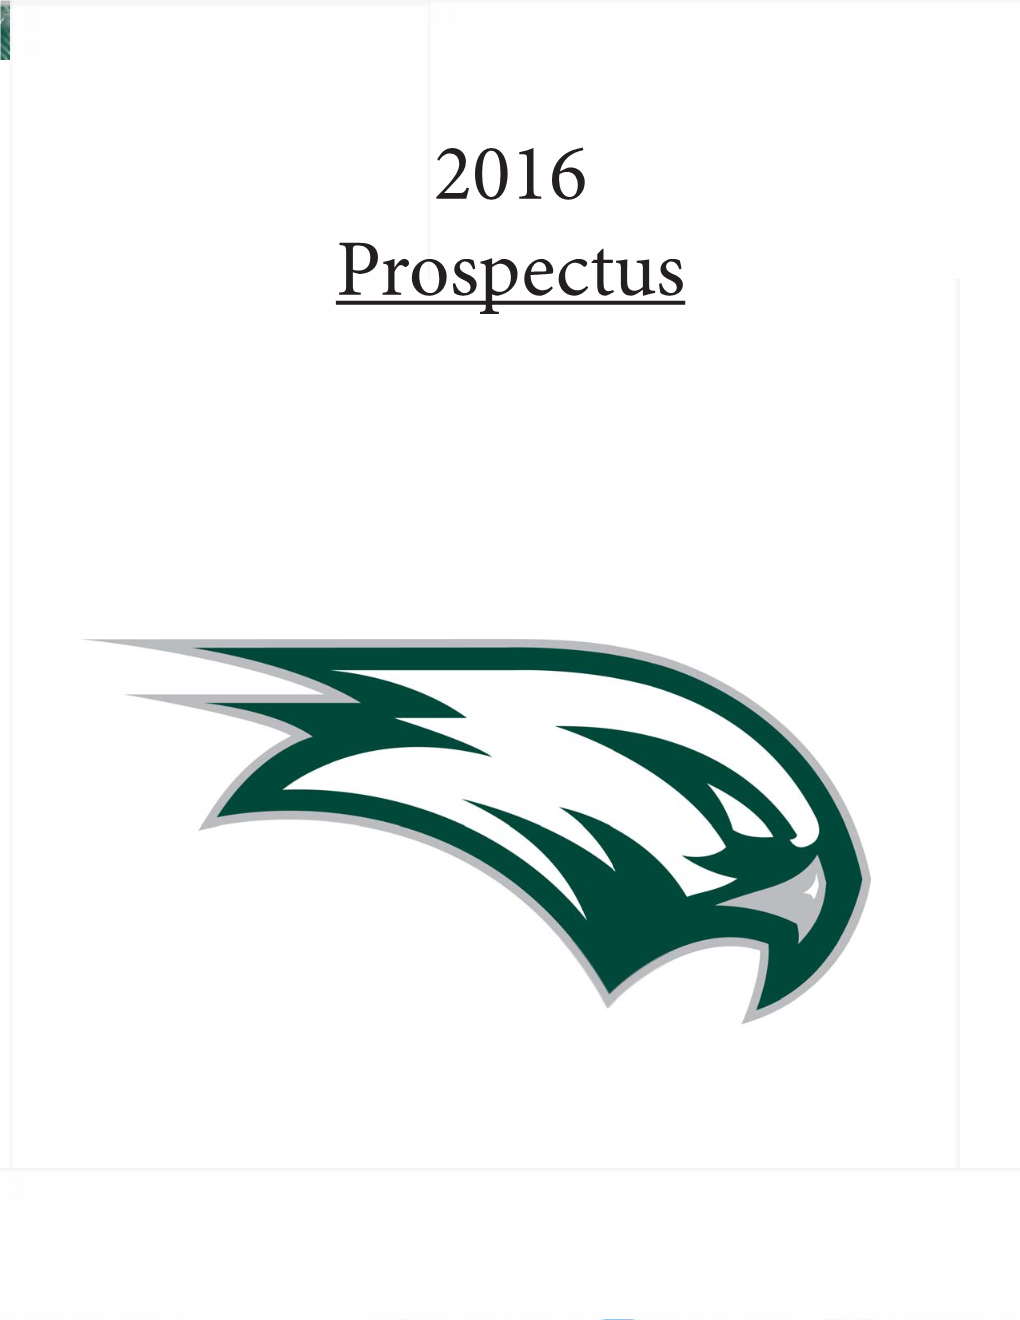 2016 Football Prospectus.Indd